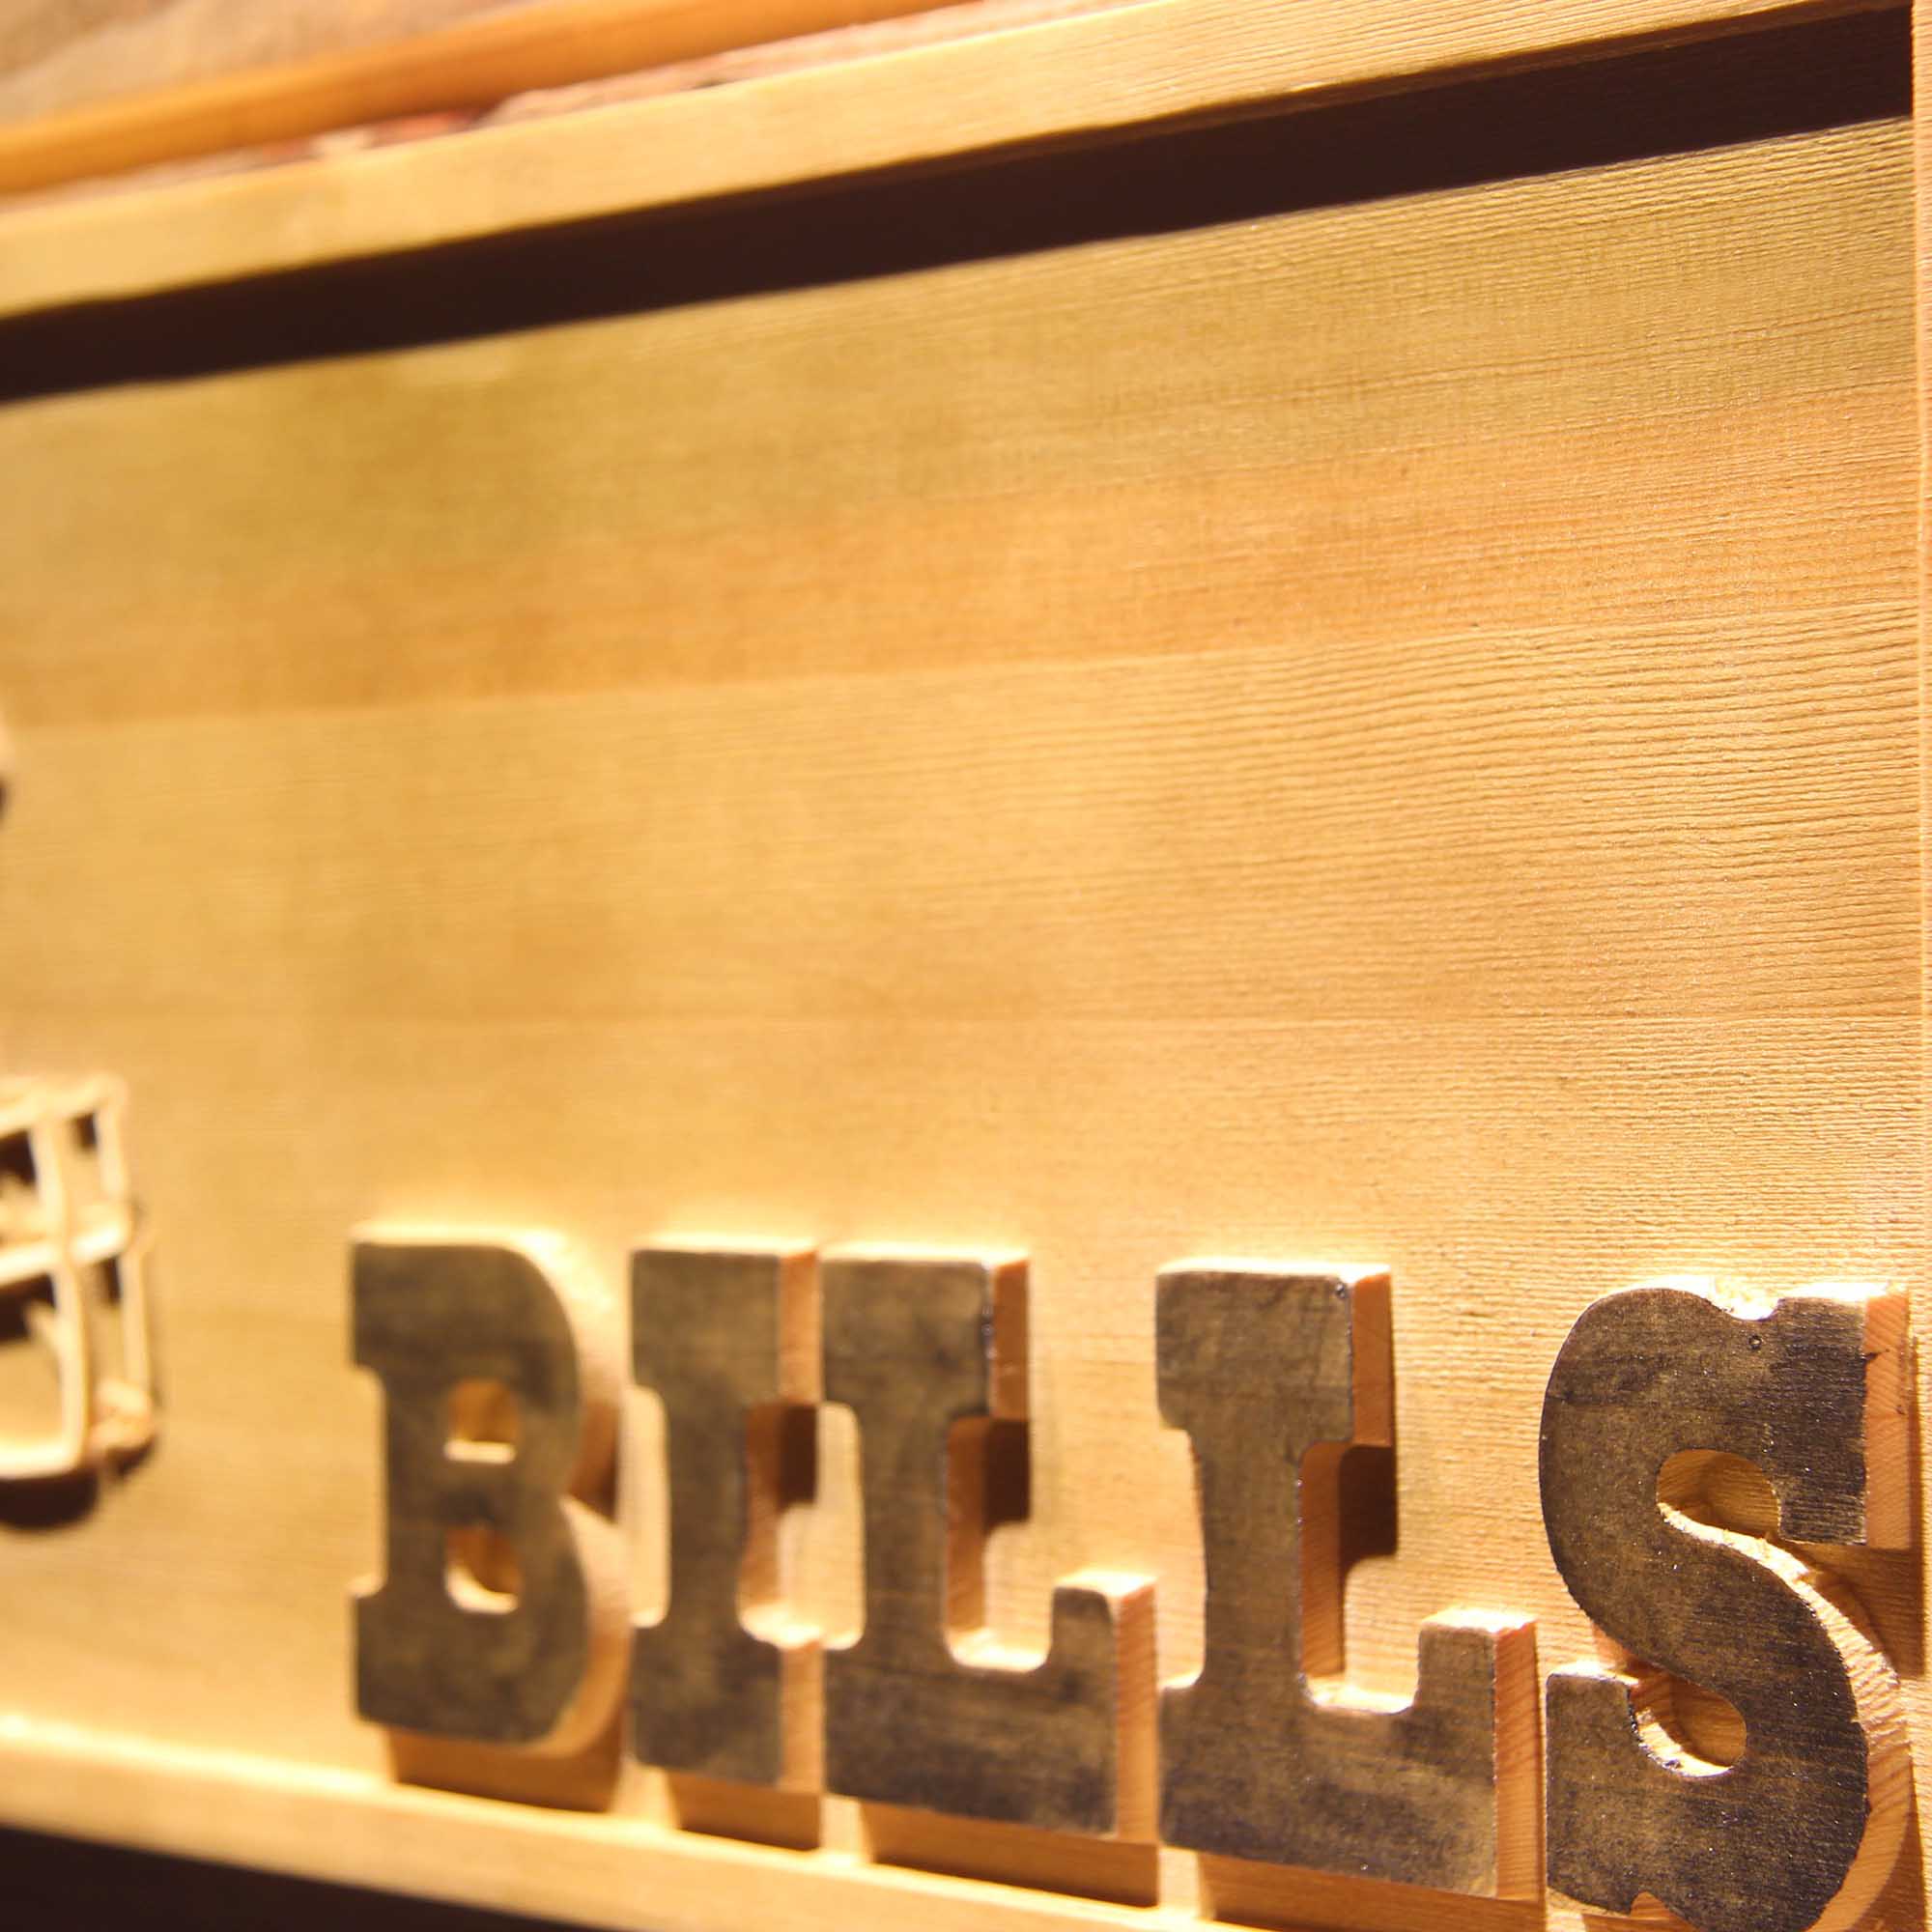 Buffalo Bills Helmet 3D Wooden Engrave Sign